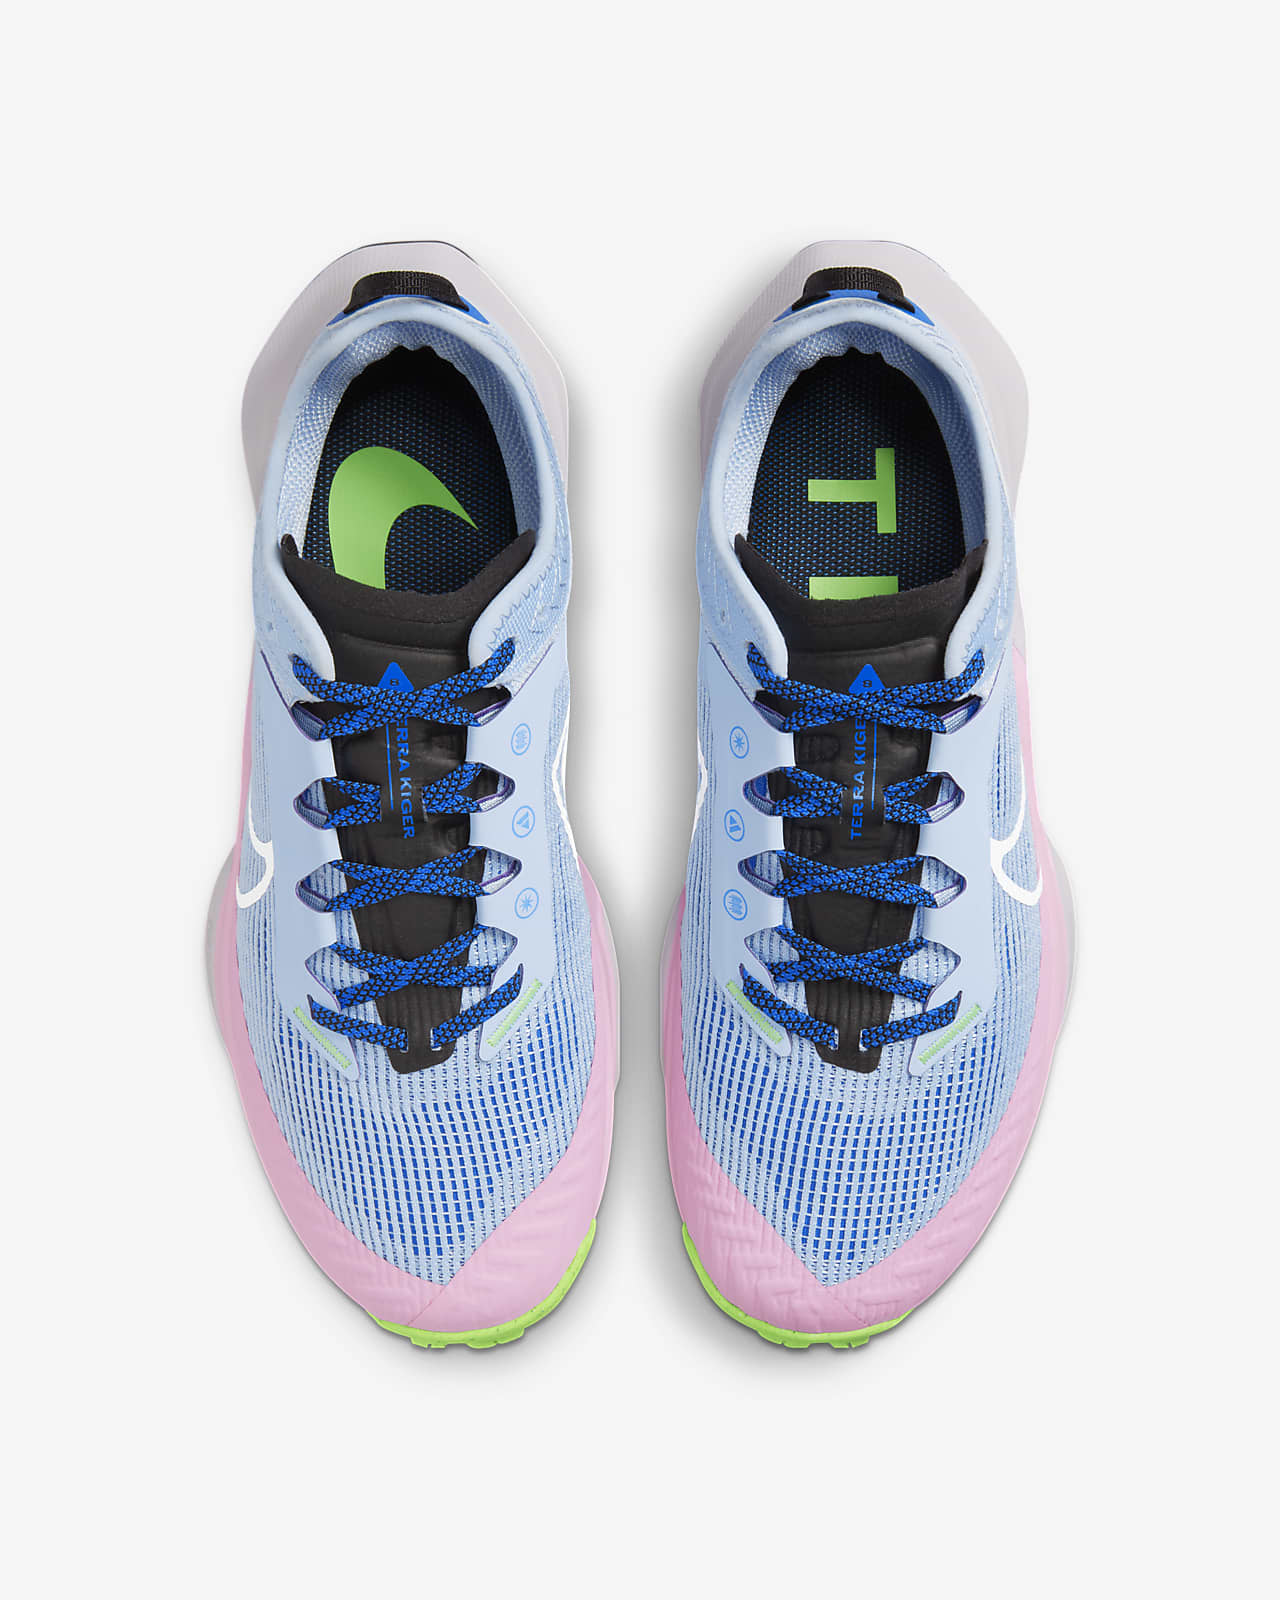 Nike Air Zoom Terra Kiger 8 Women's Trail Running Shoes. Nike LU